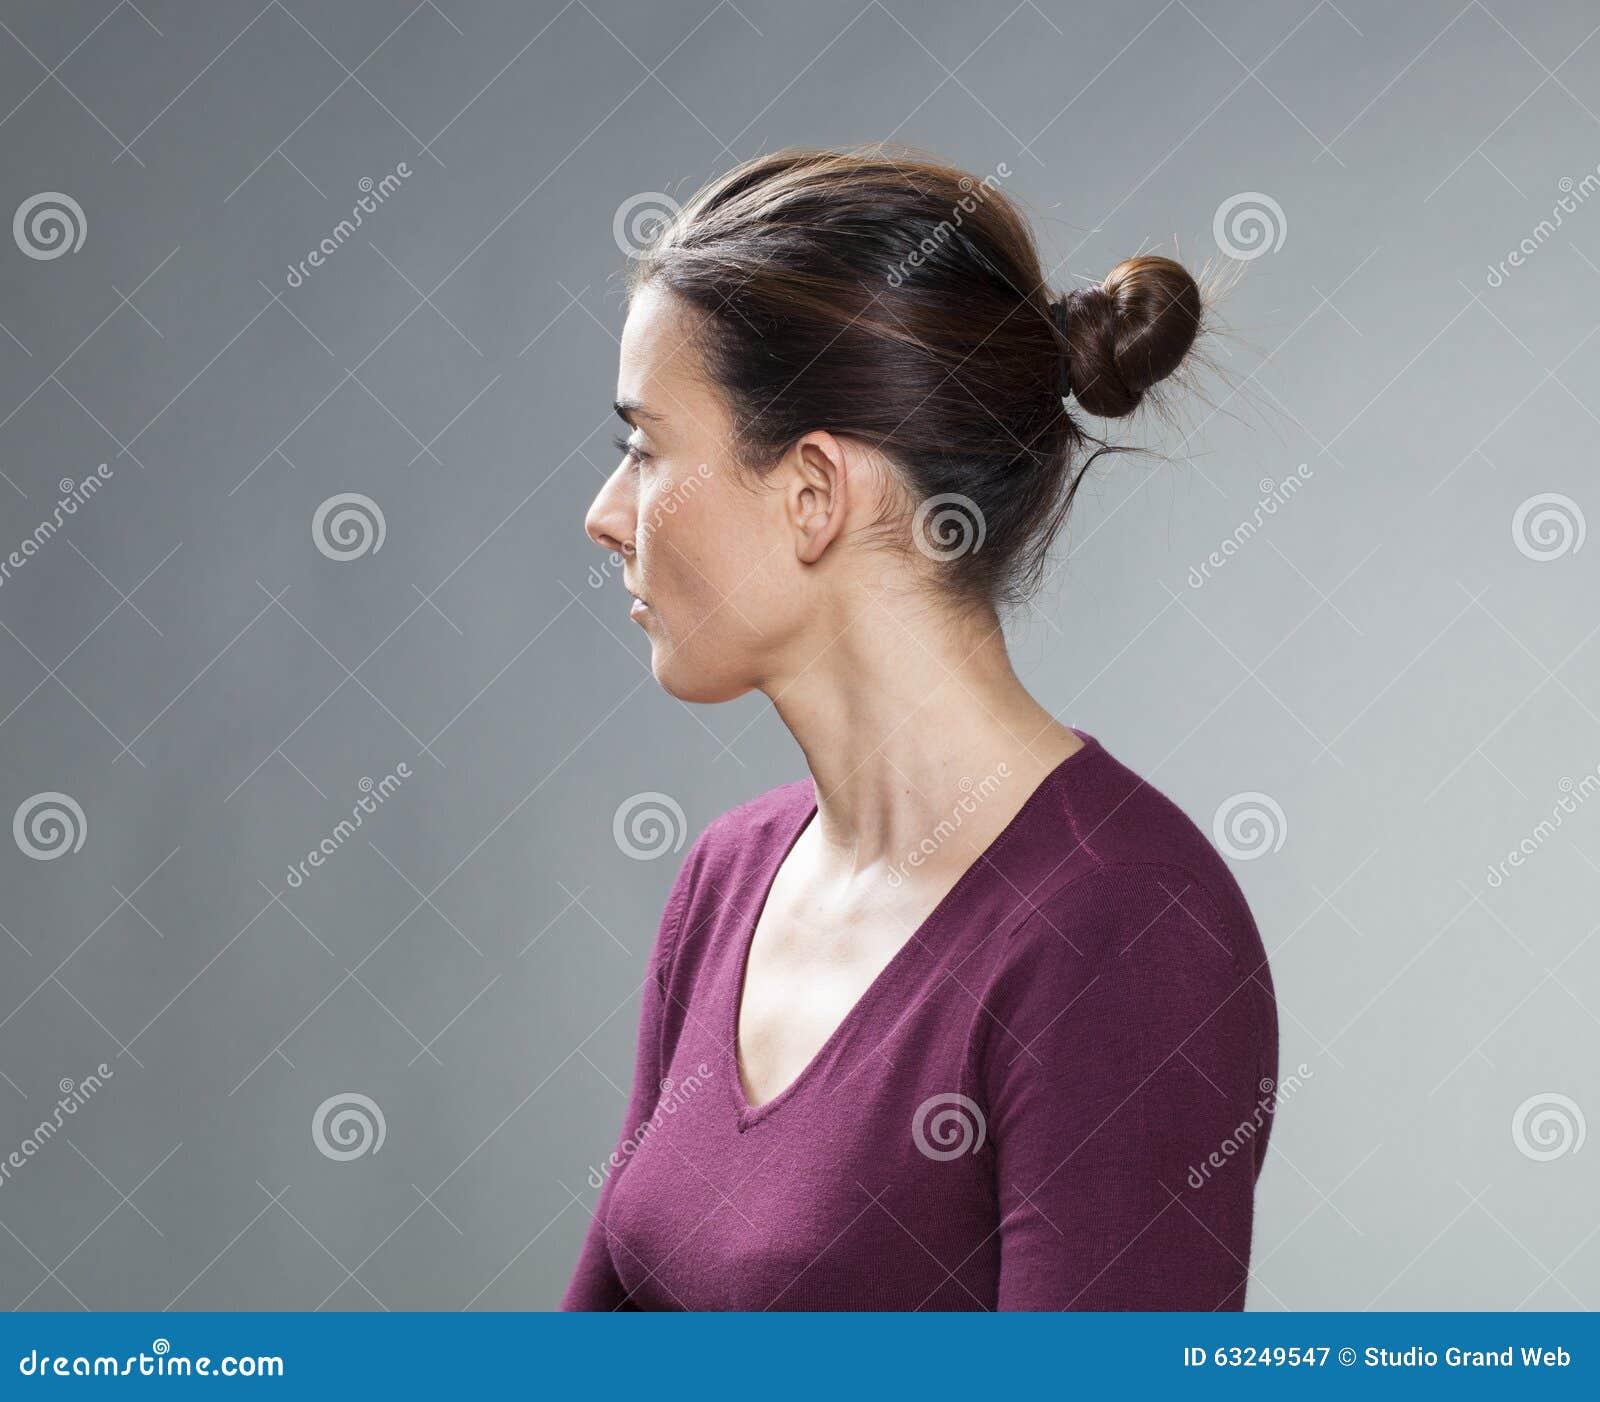 studio portrait of a thinking 30s woman, profile view